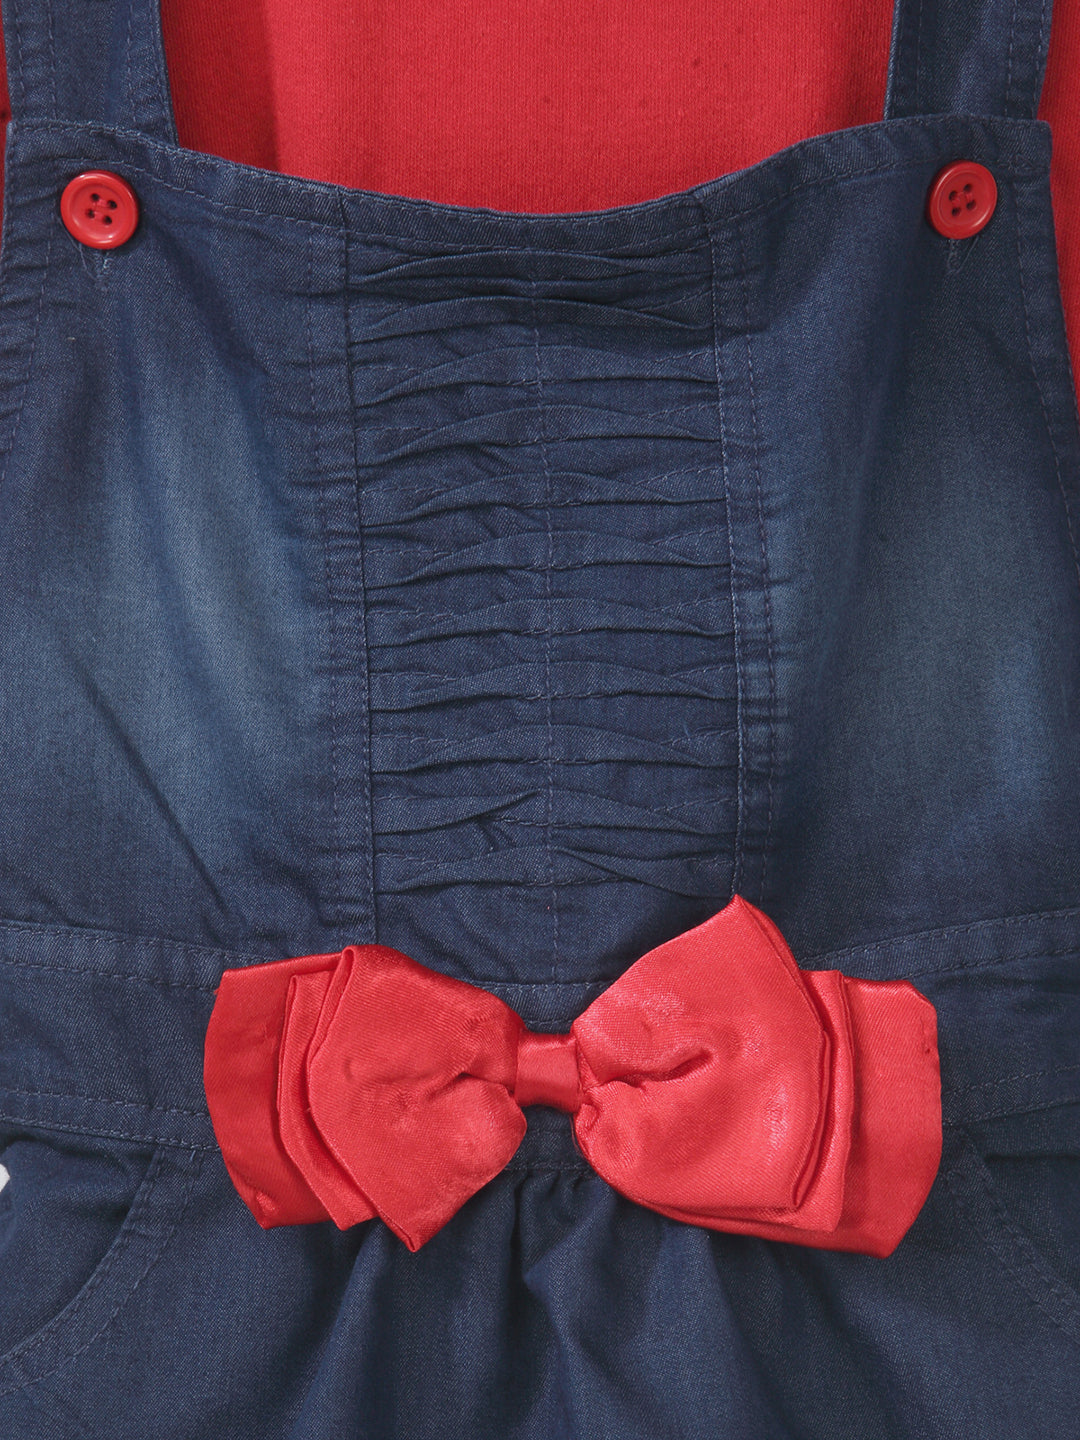 Girls Denim Dungaree Skirt with Red Sleeveless inner Top